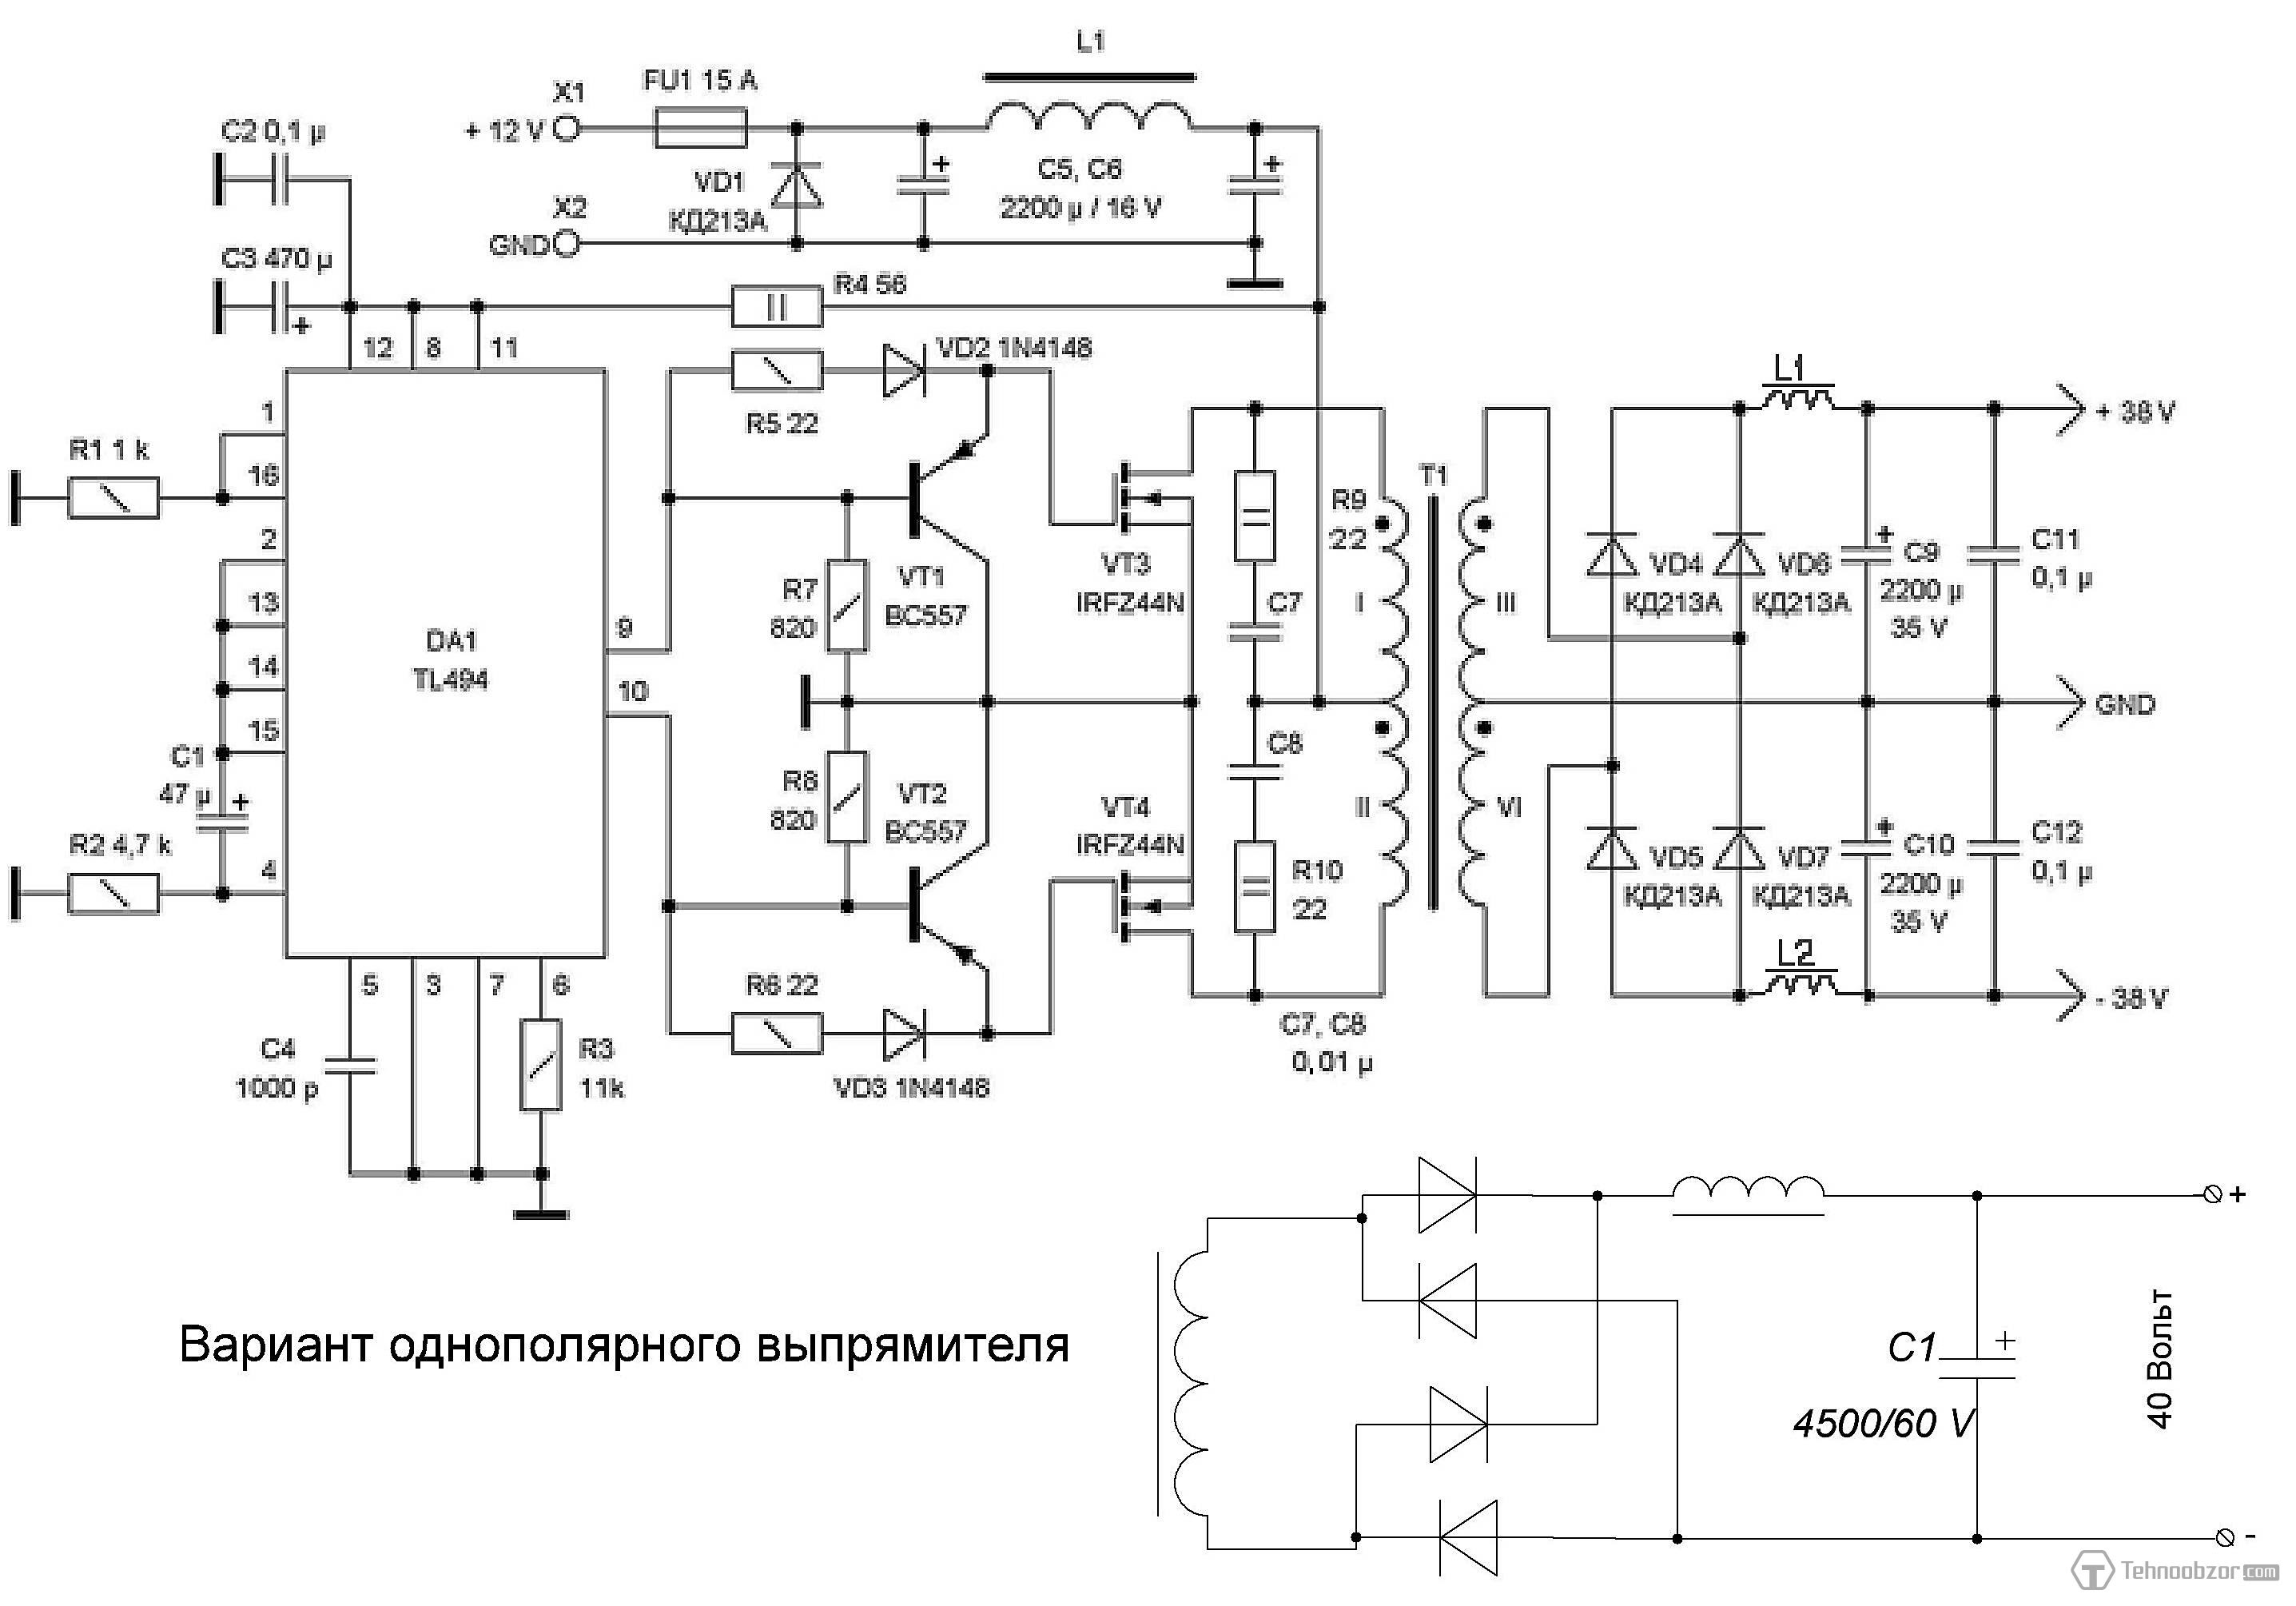 Diagram Amplifier Circuit Diagrams 1000w Full Version Hd Quality Diagrams 1000w Pdfxpepinq Trkbrd It